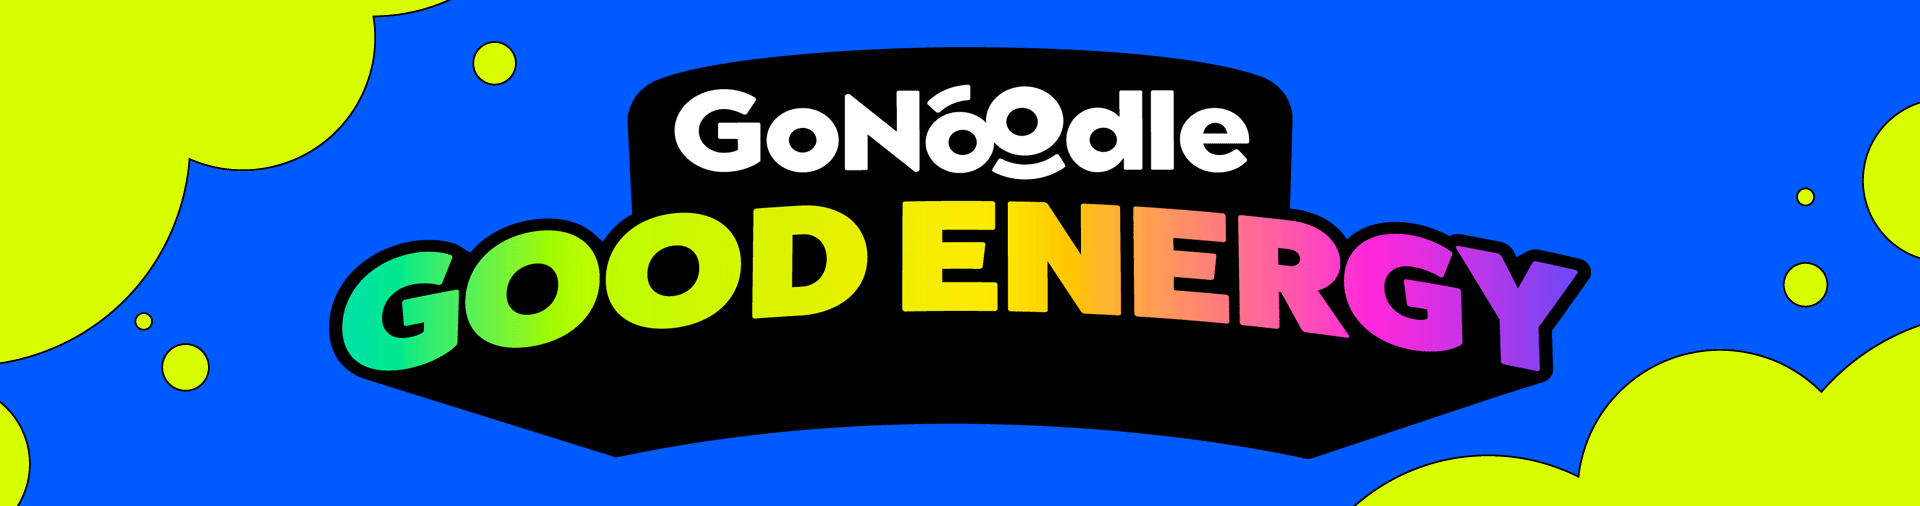 Go Noodle Good Energy logo